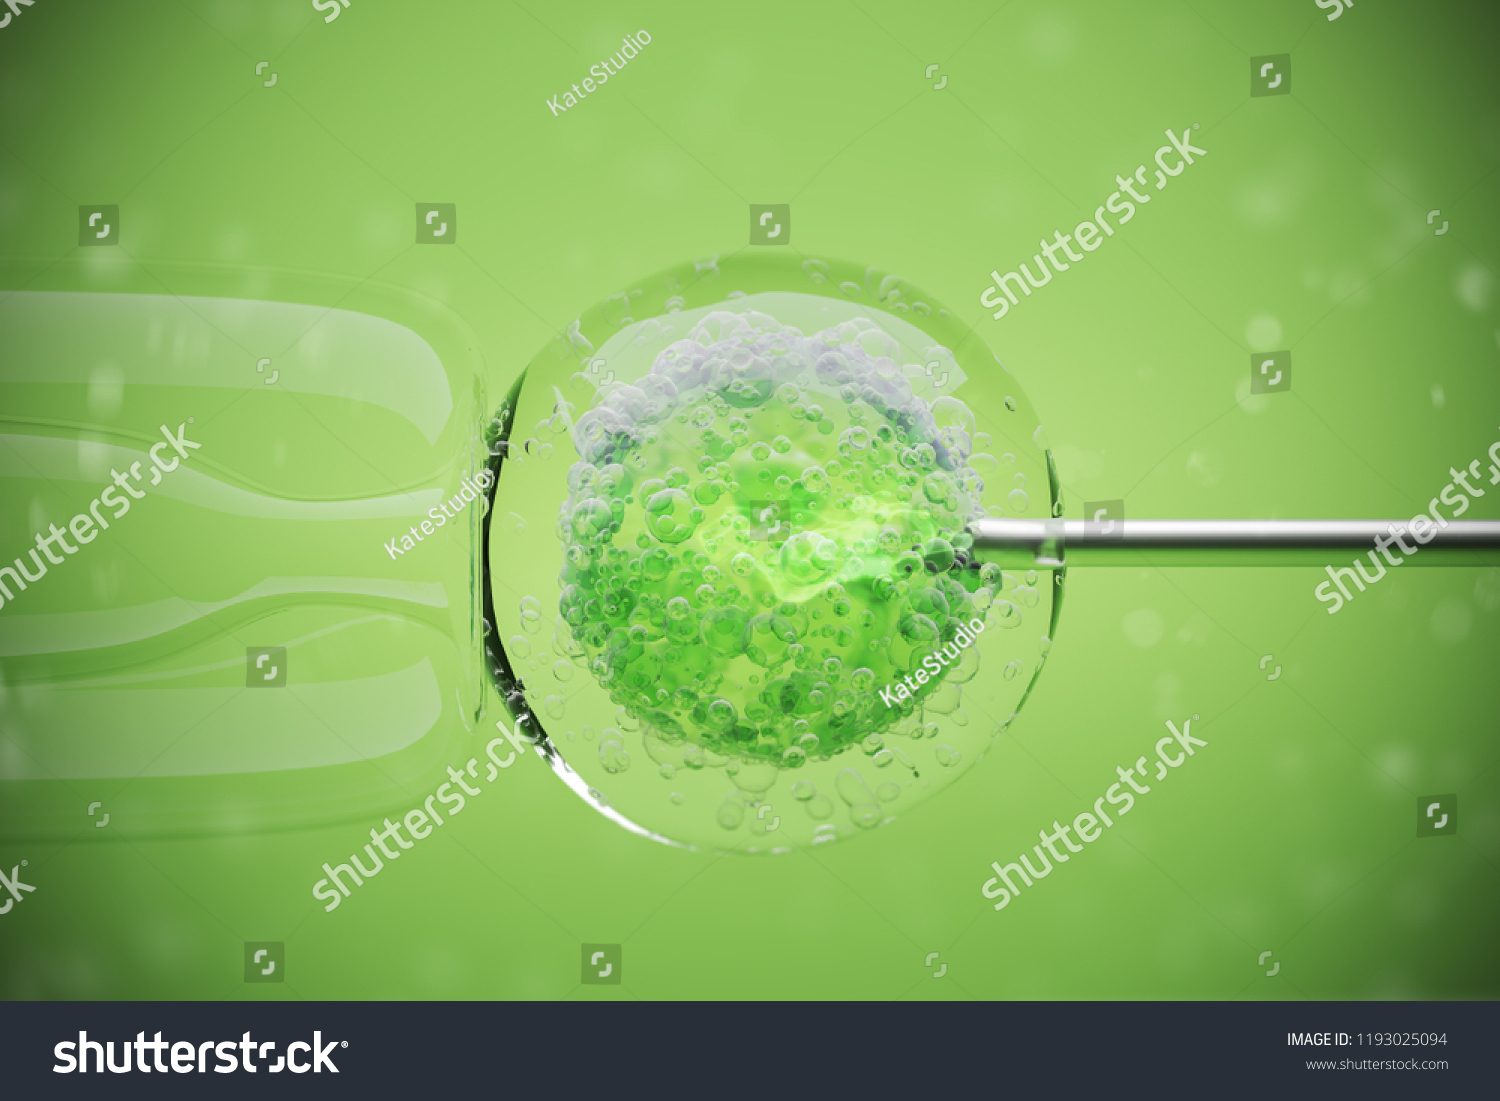 Vitro Fertilization Human Female Cell On Stock Illustration 1193025094 Shutterstock 7540